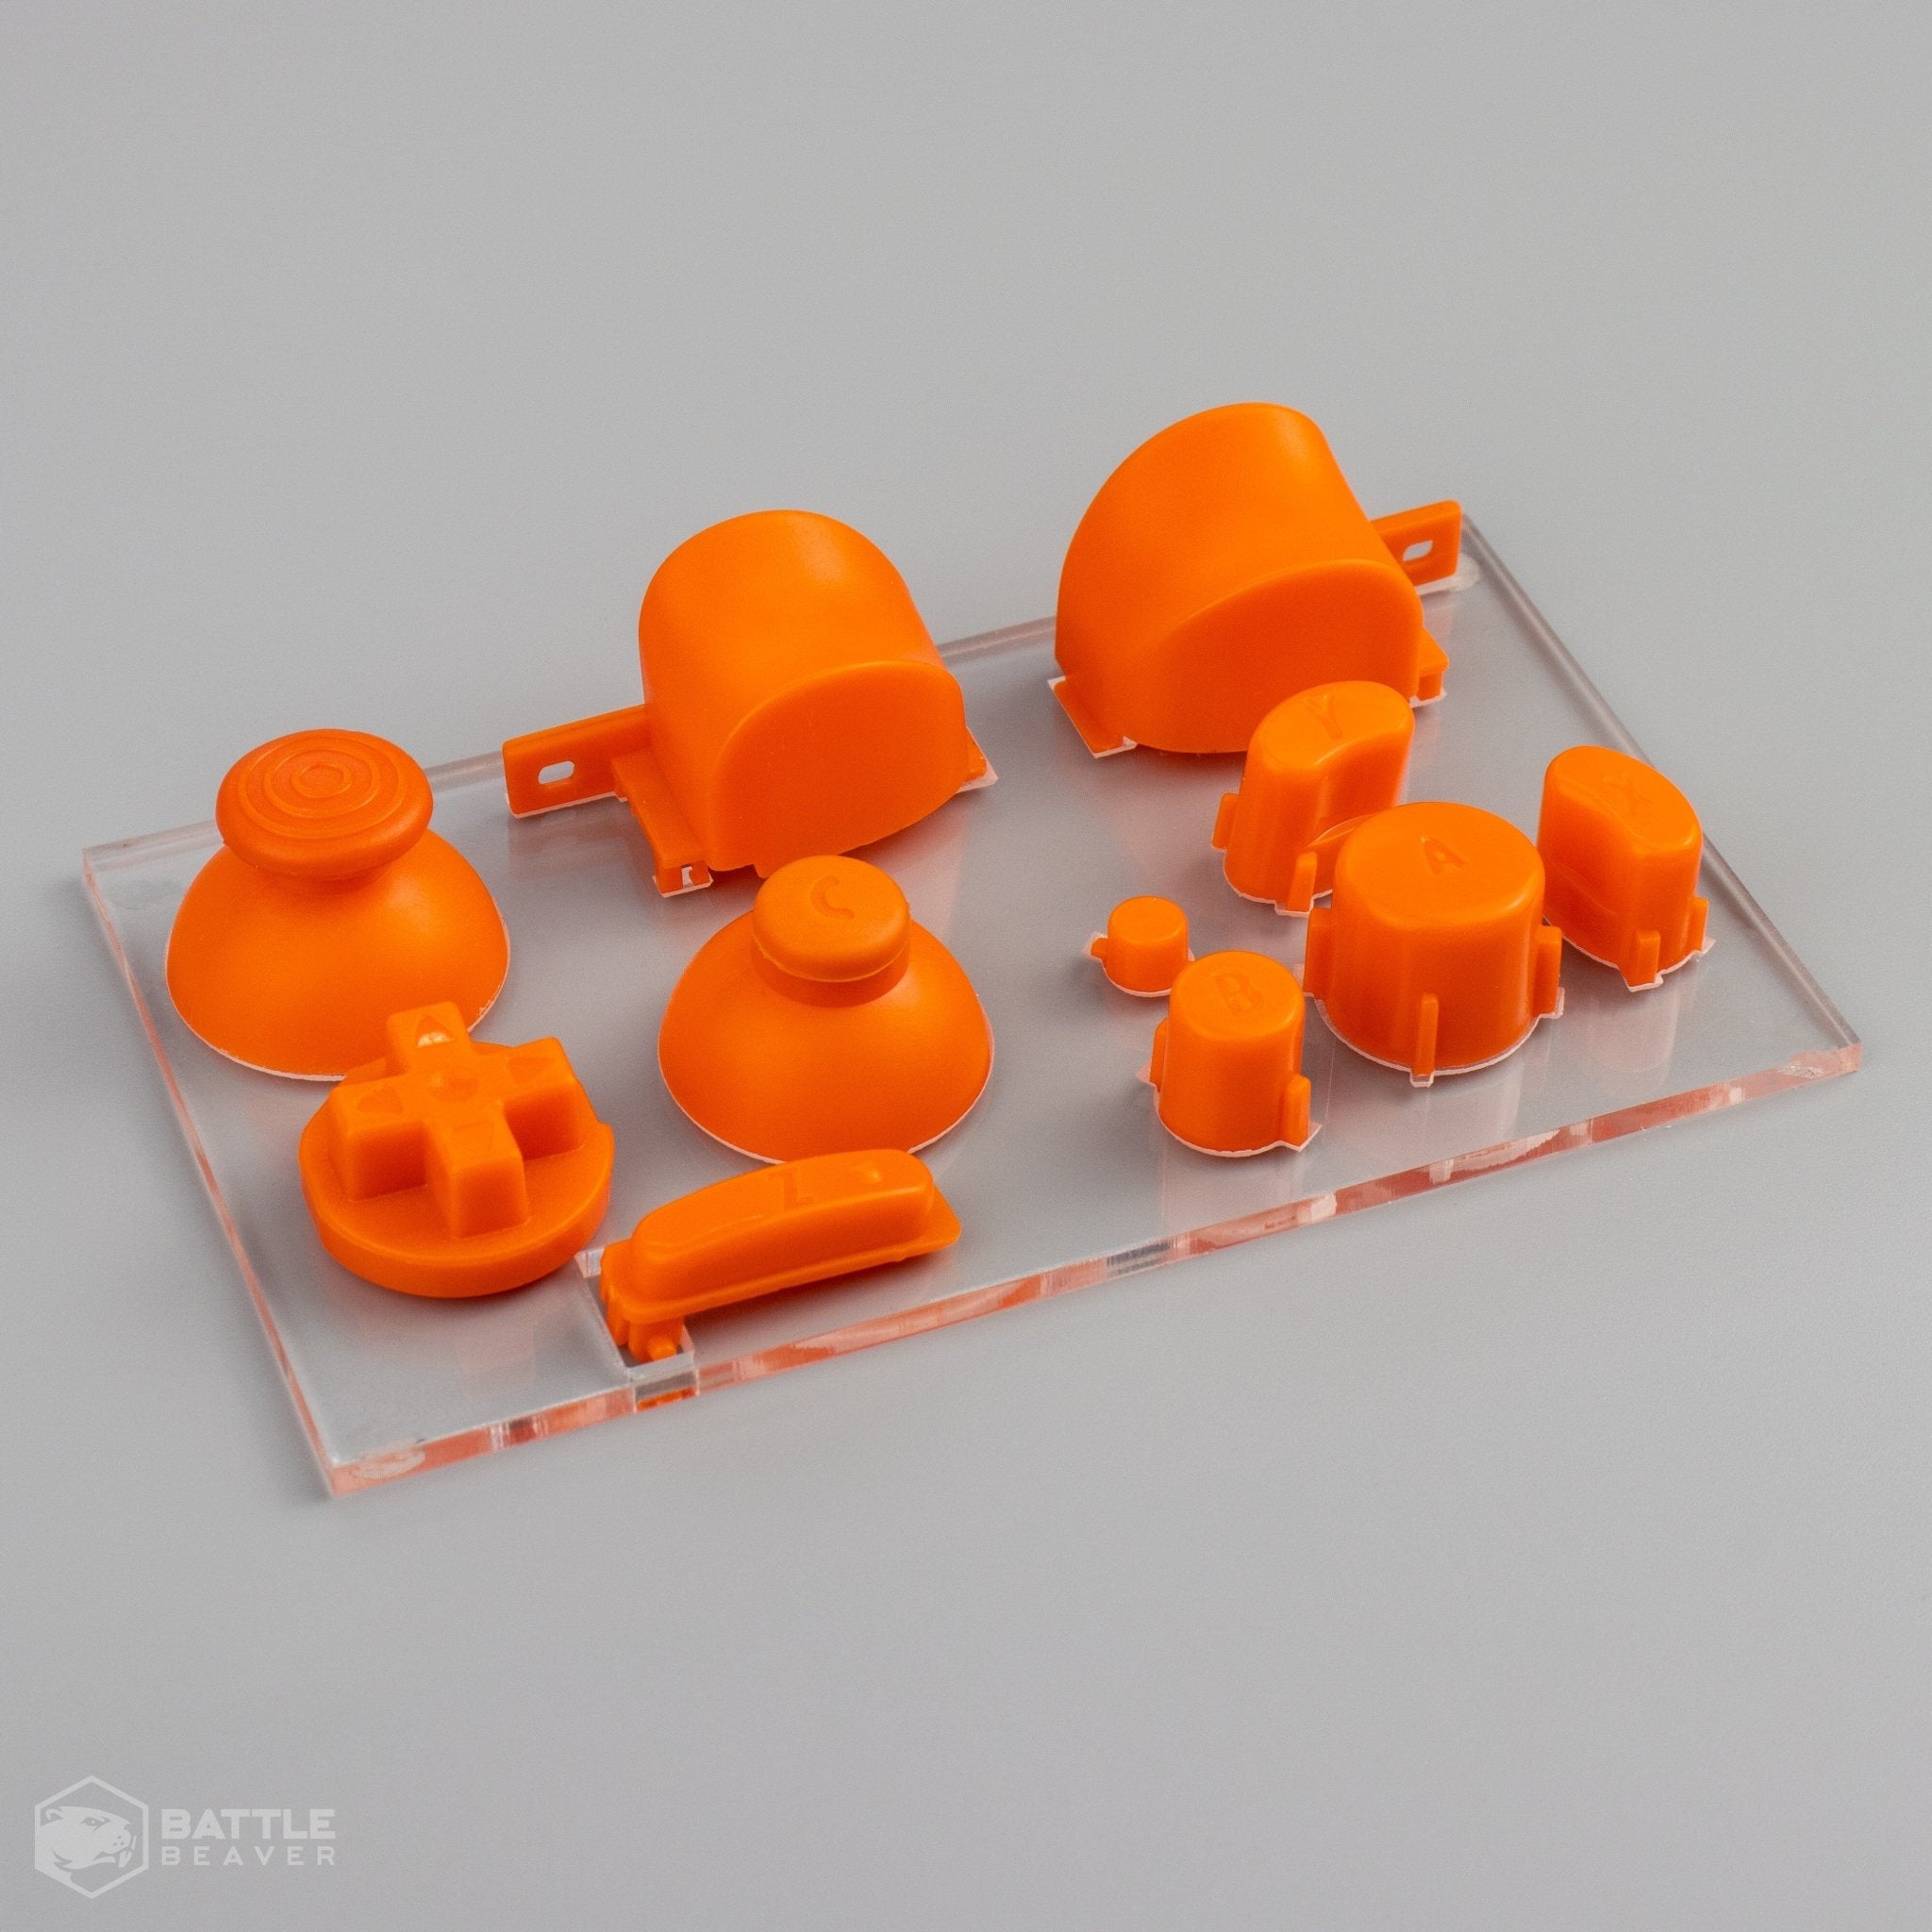 3rd Party Gamecube Parts Kit - Battle Beaver Customs - Orange